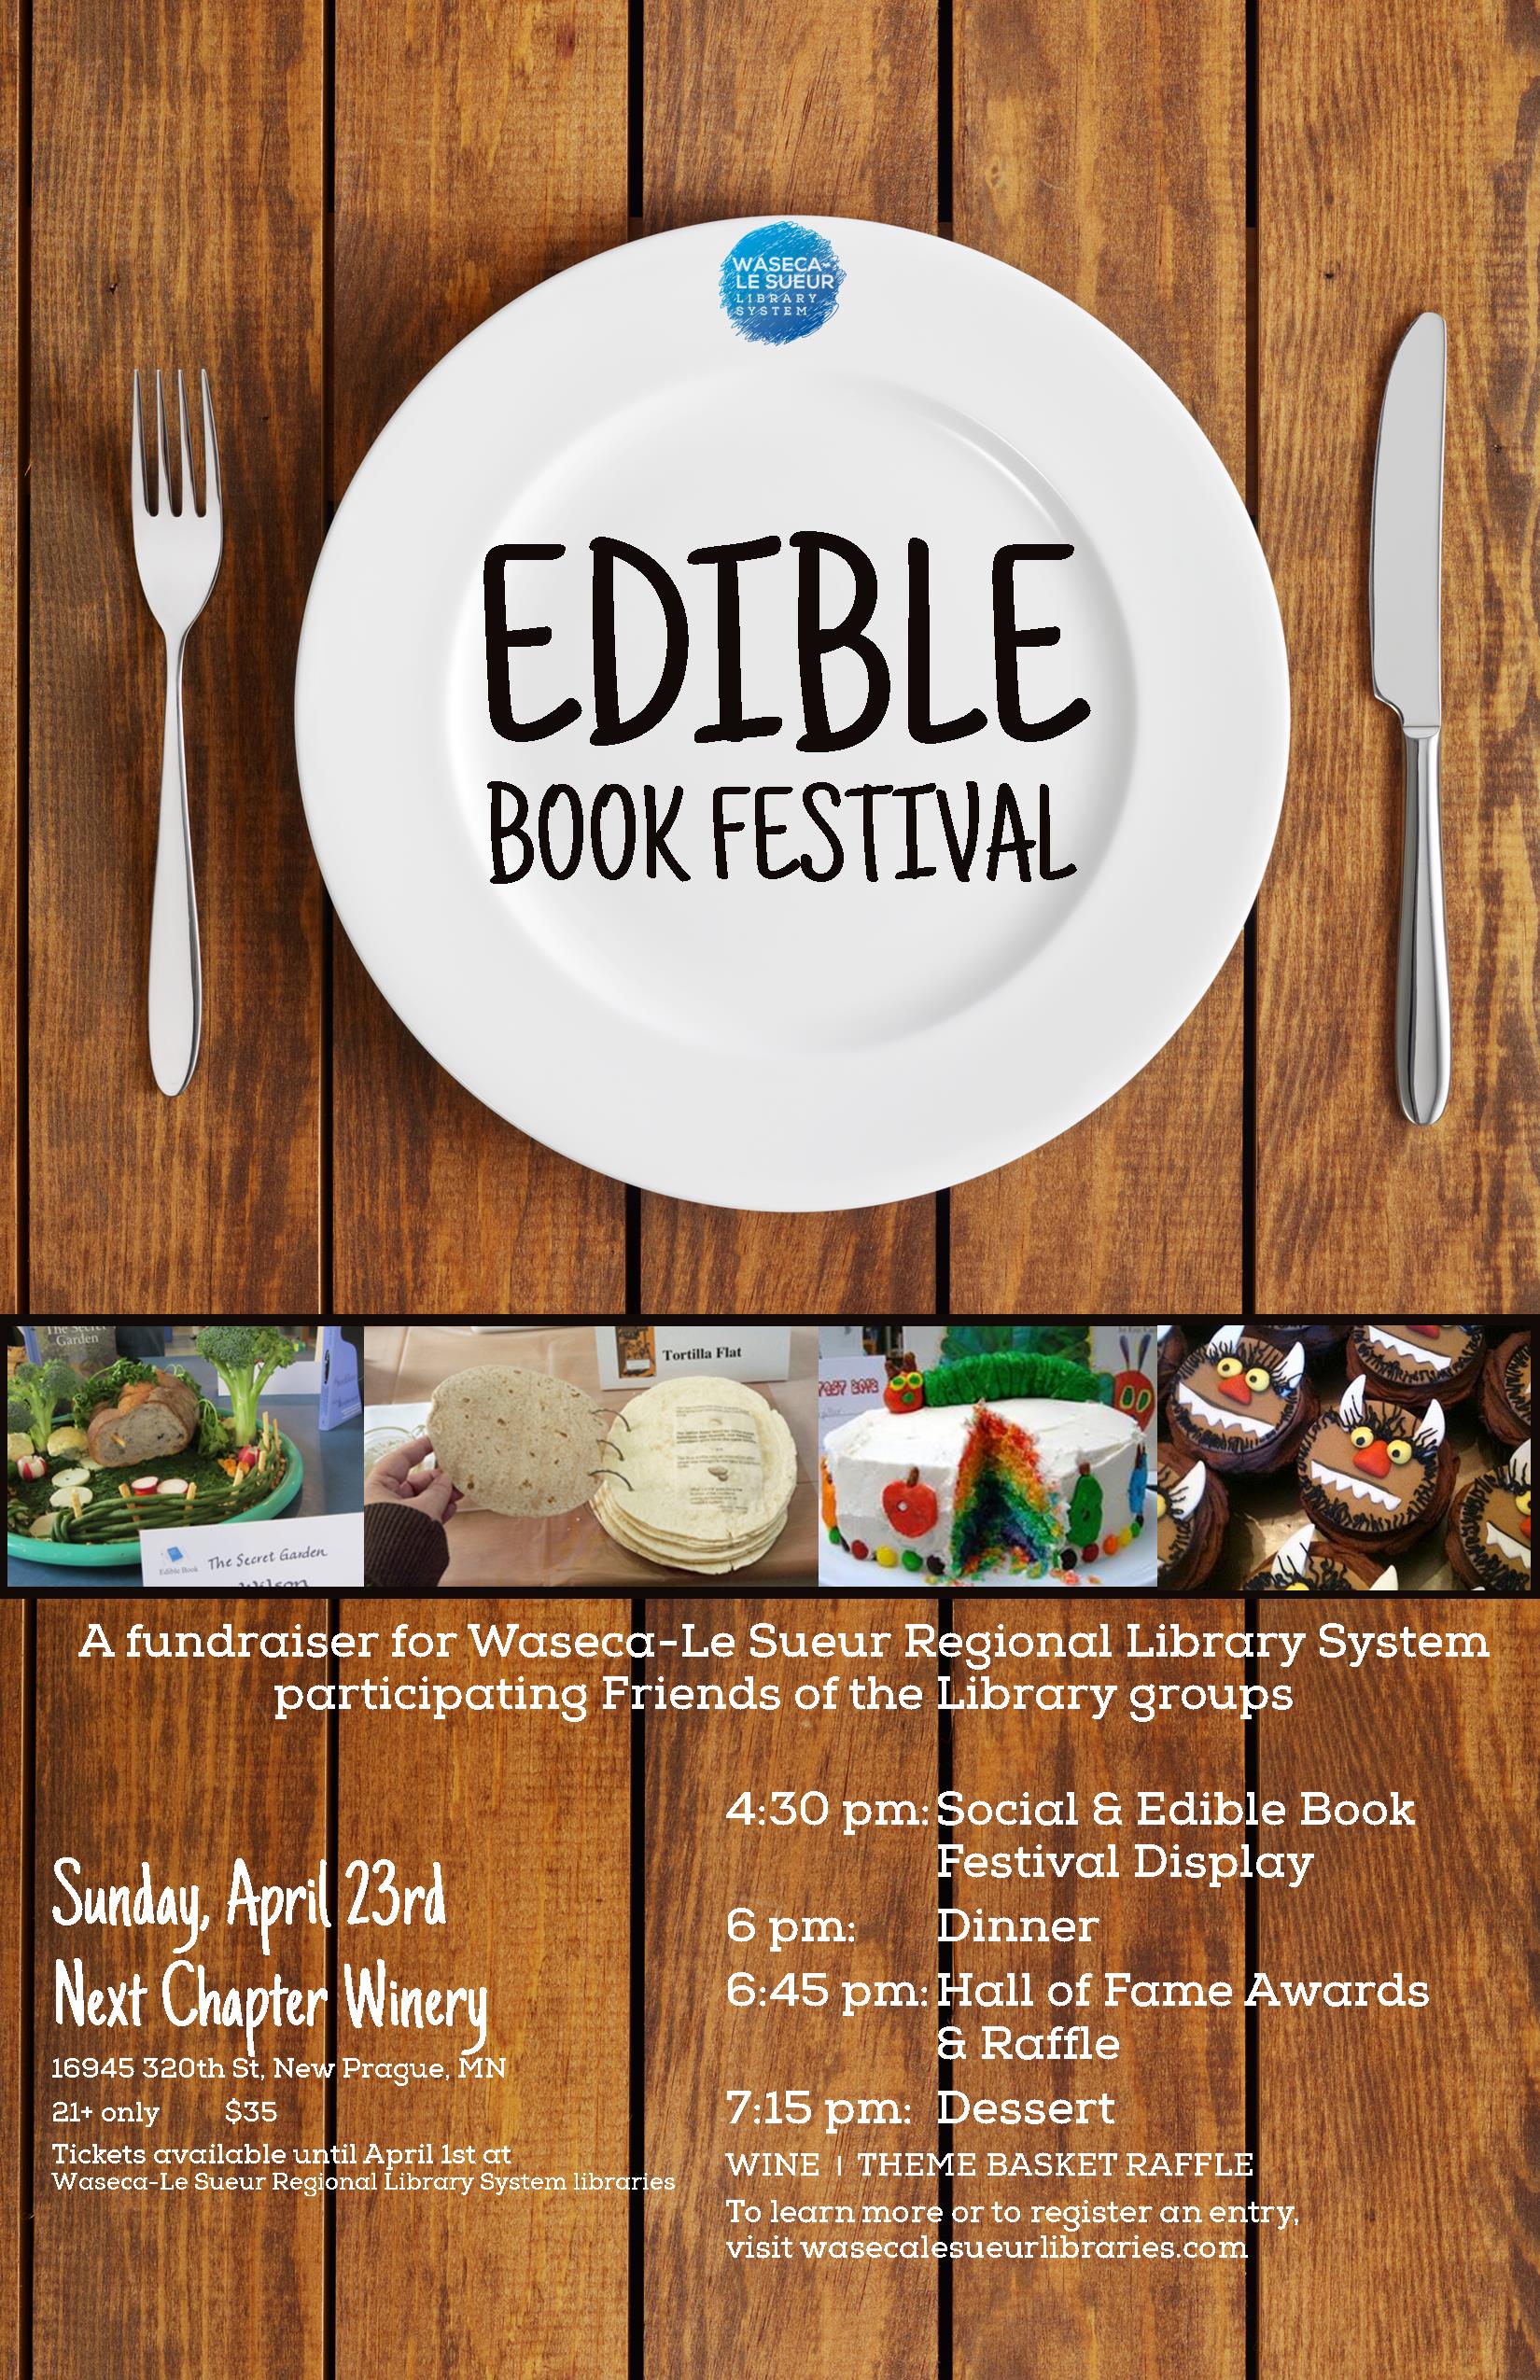 Attend The Edible Book Festival!